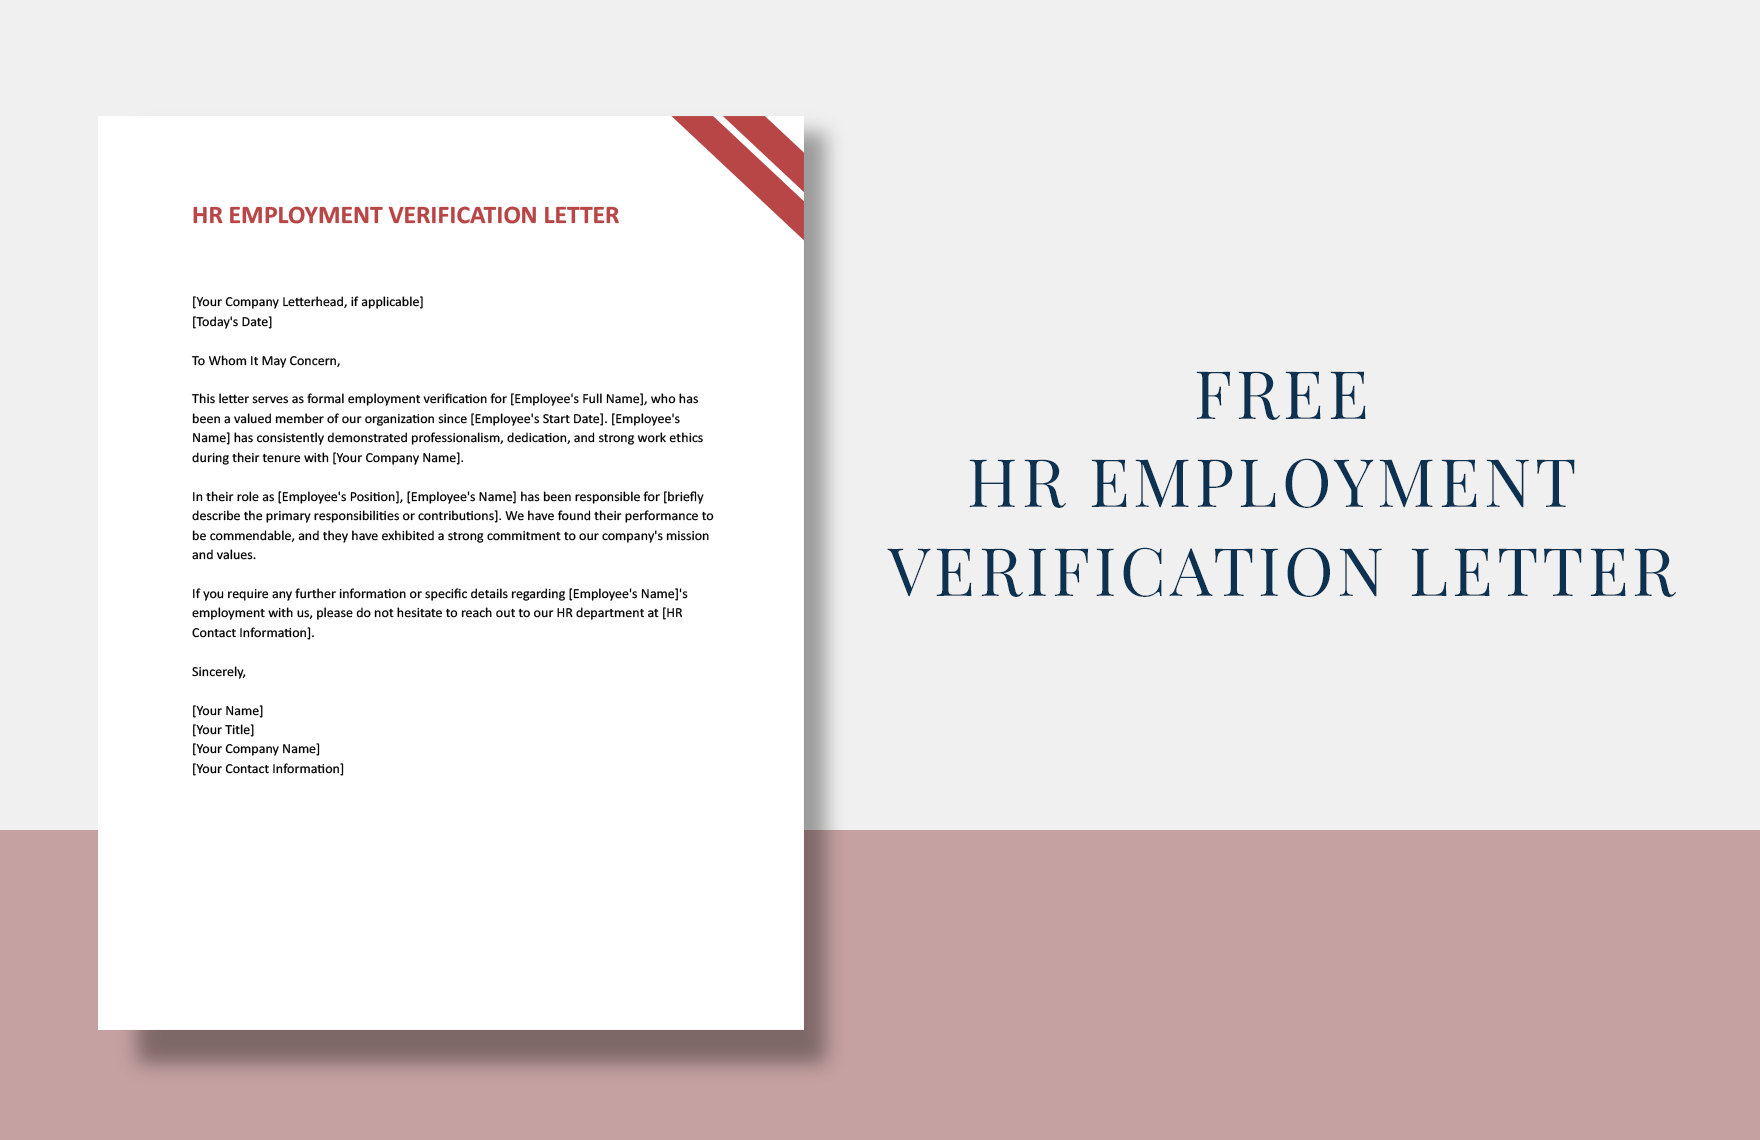 Free HR Employment Verification Letter